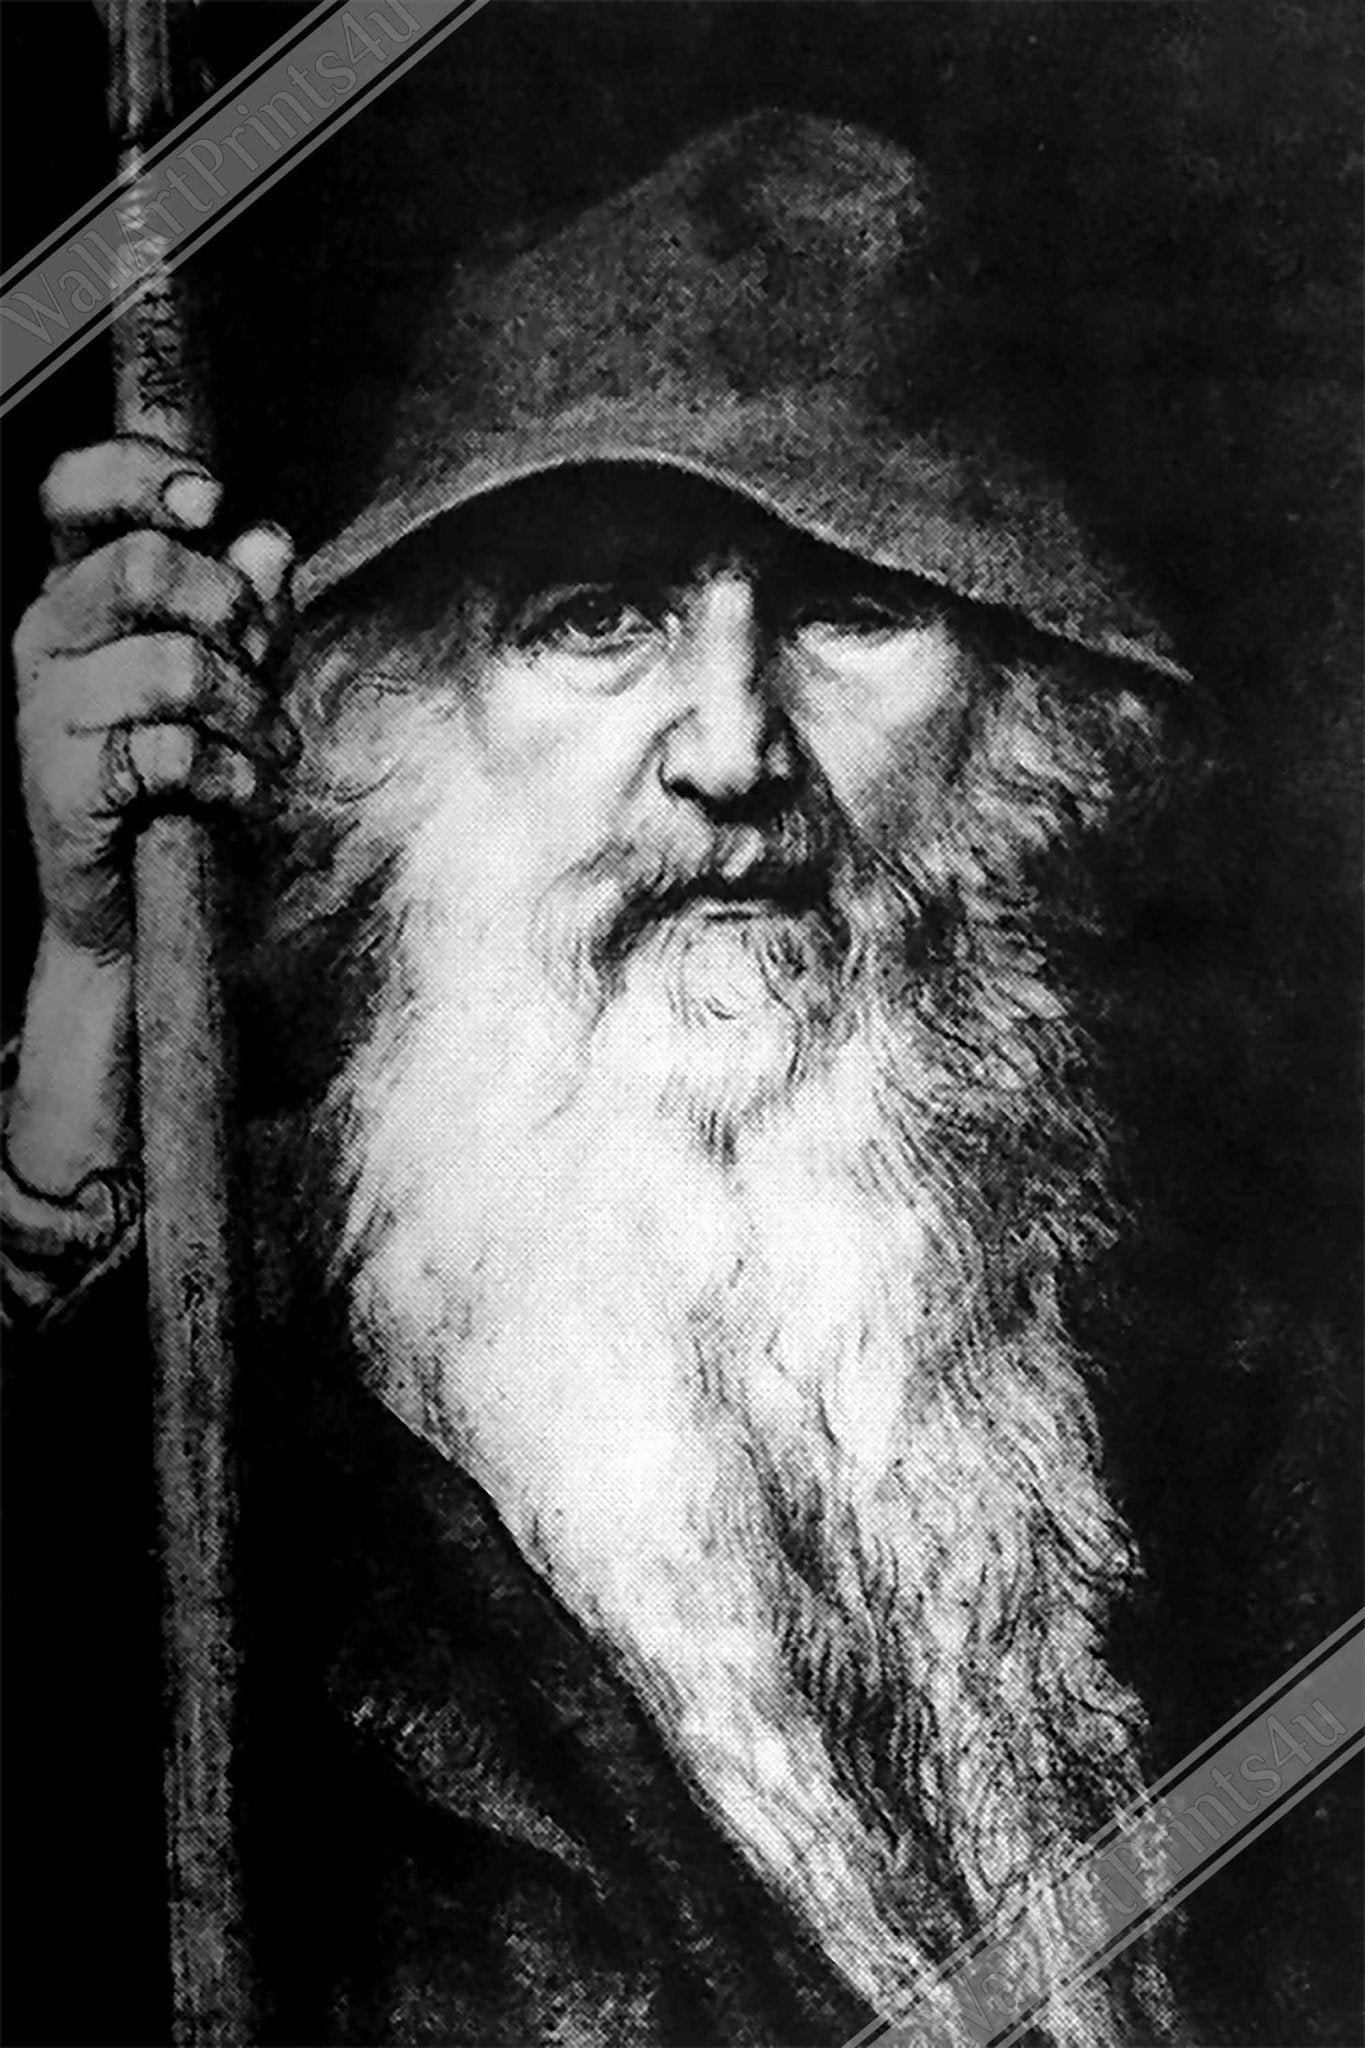 Odin Canvas Canvas Print - Odin Norse God Of Wisdom, War And Magic - Odin The Wanderer - WallArtPrints4U